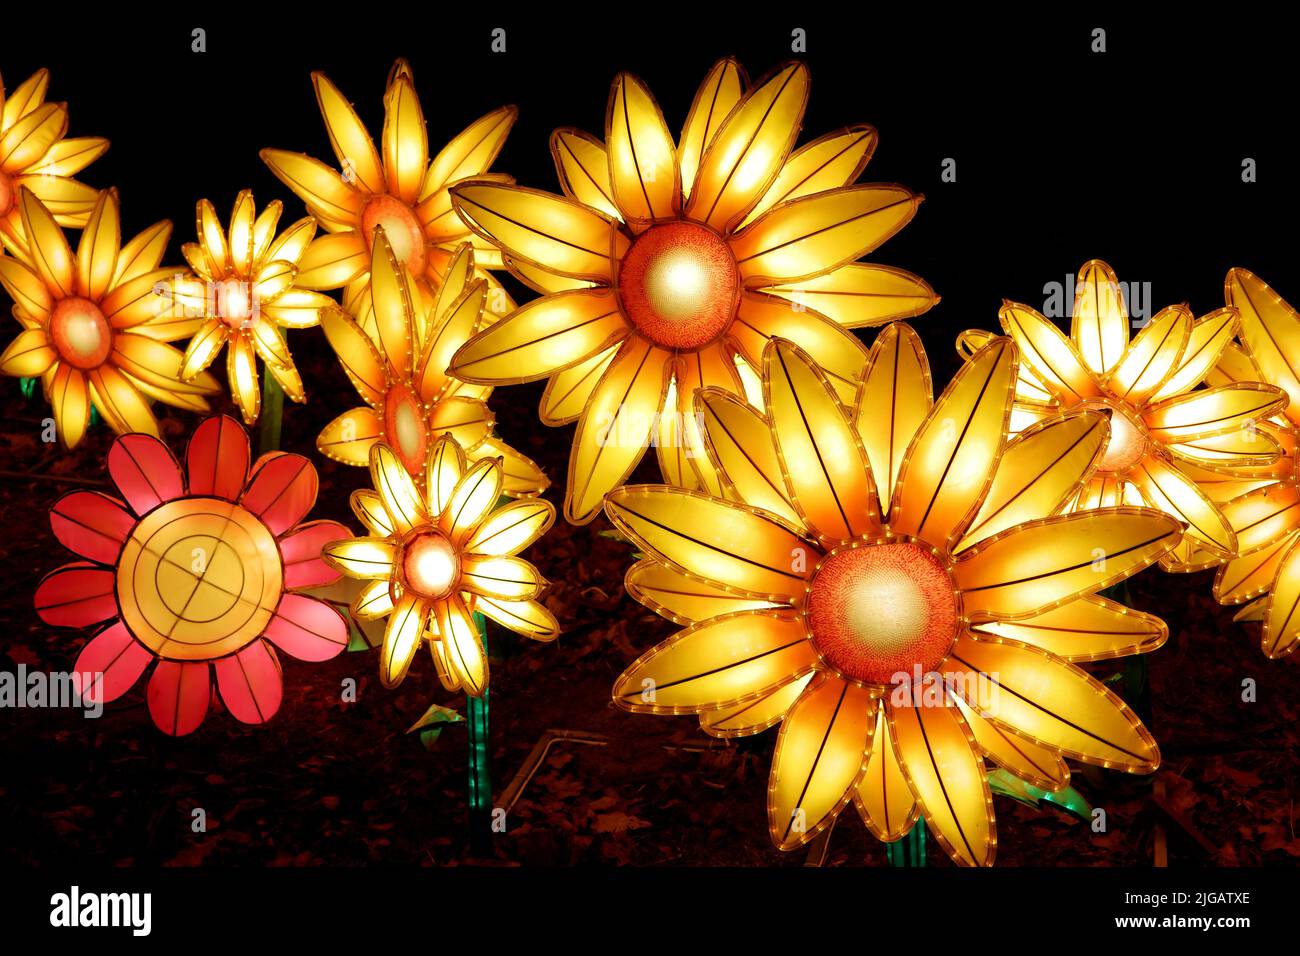 Flores chinas fotografías e imágenes de alta resolución - Alamy